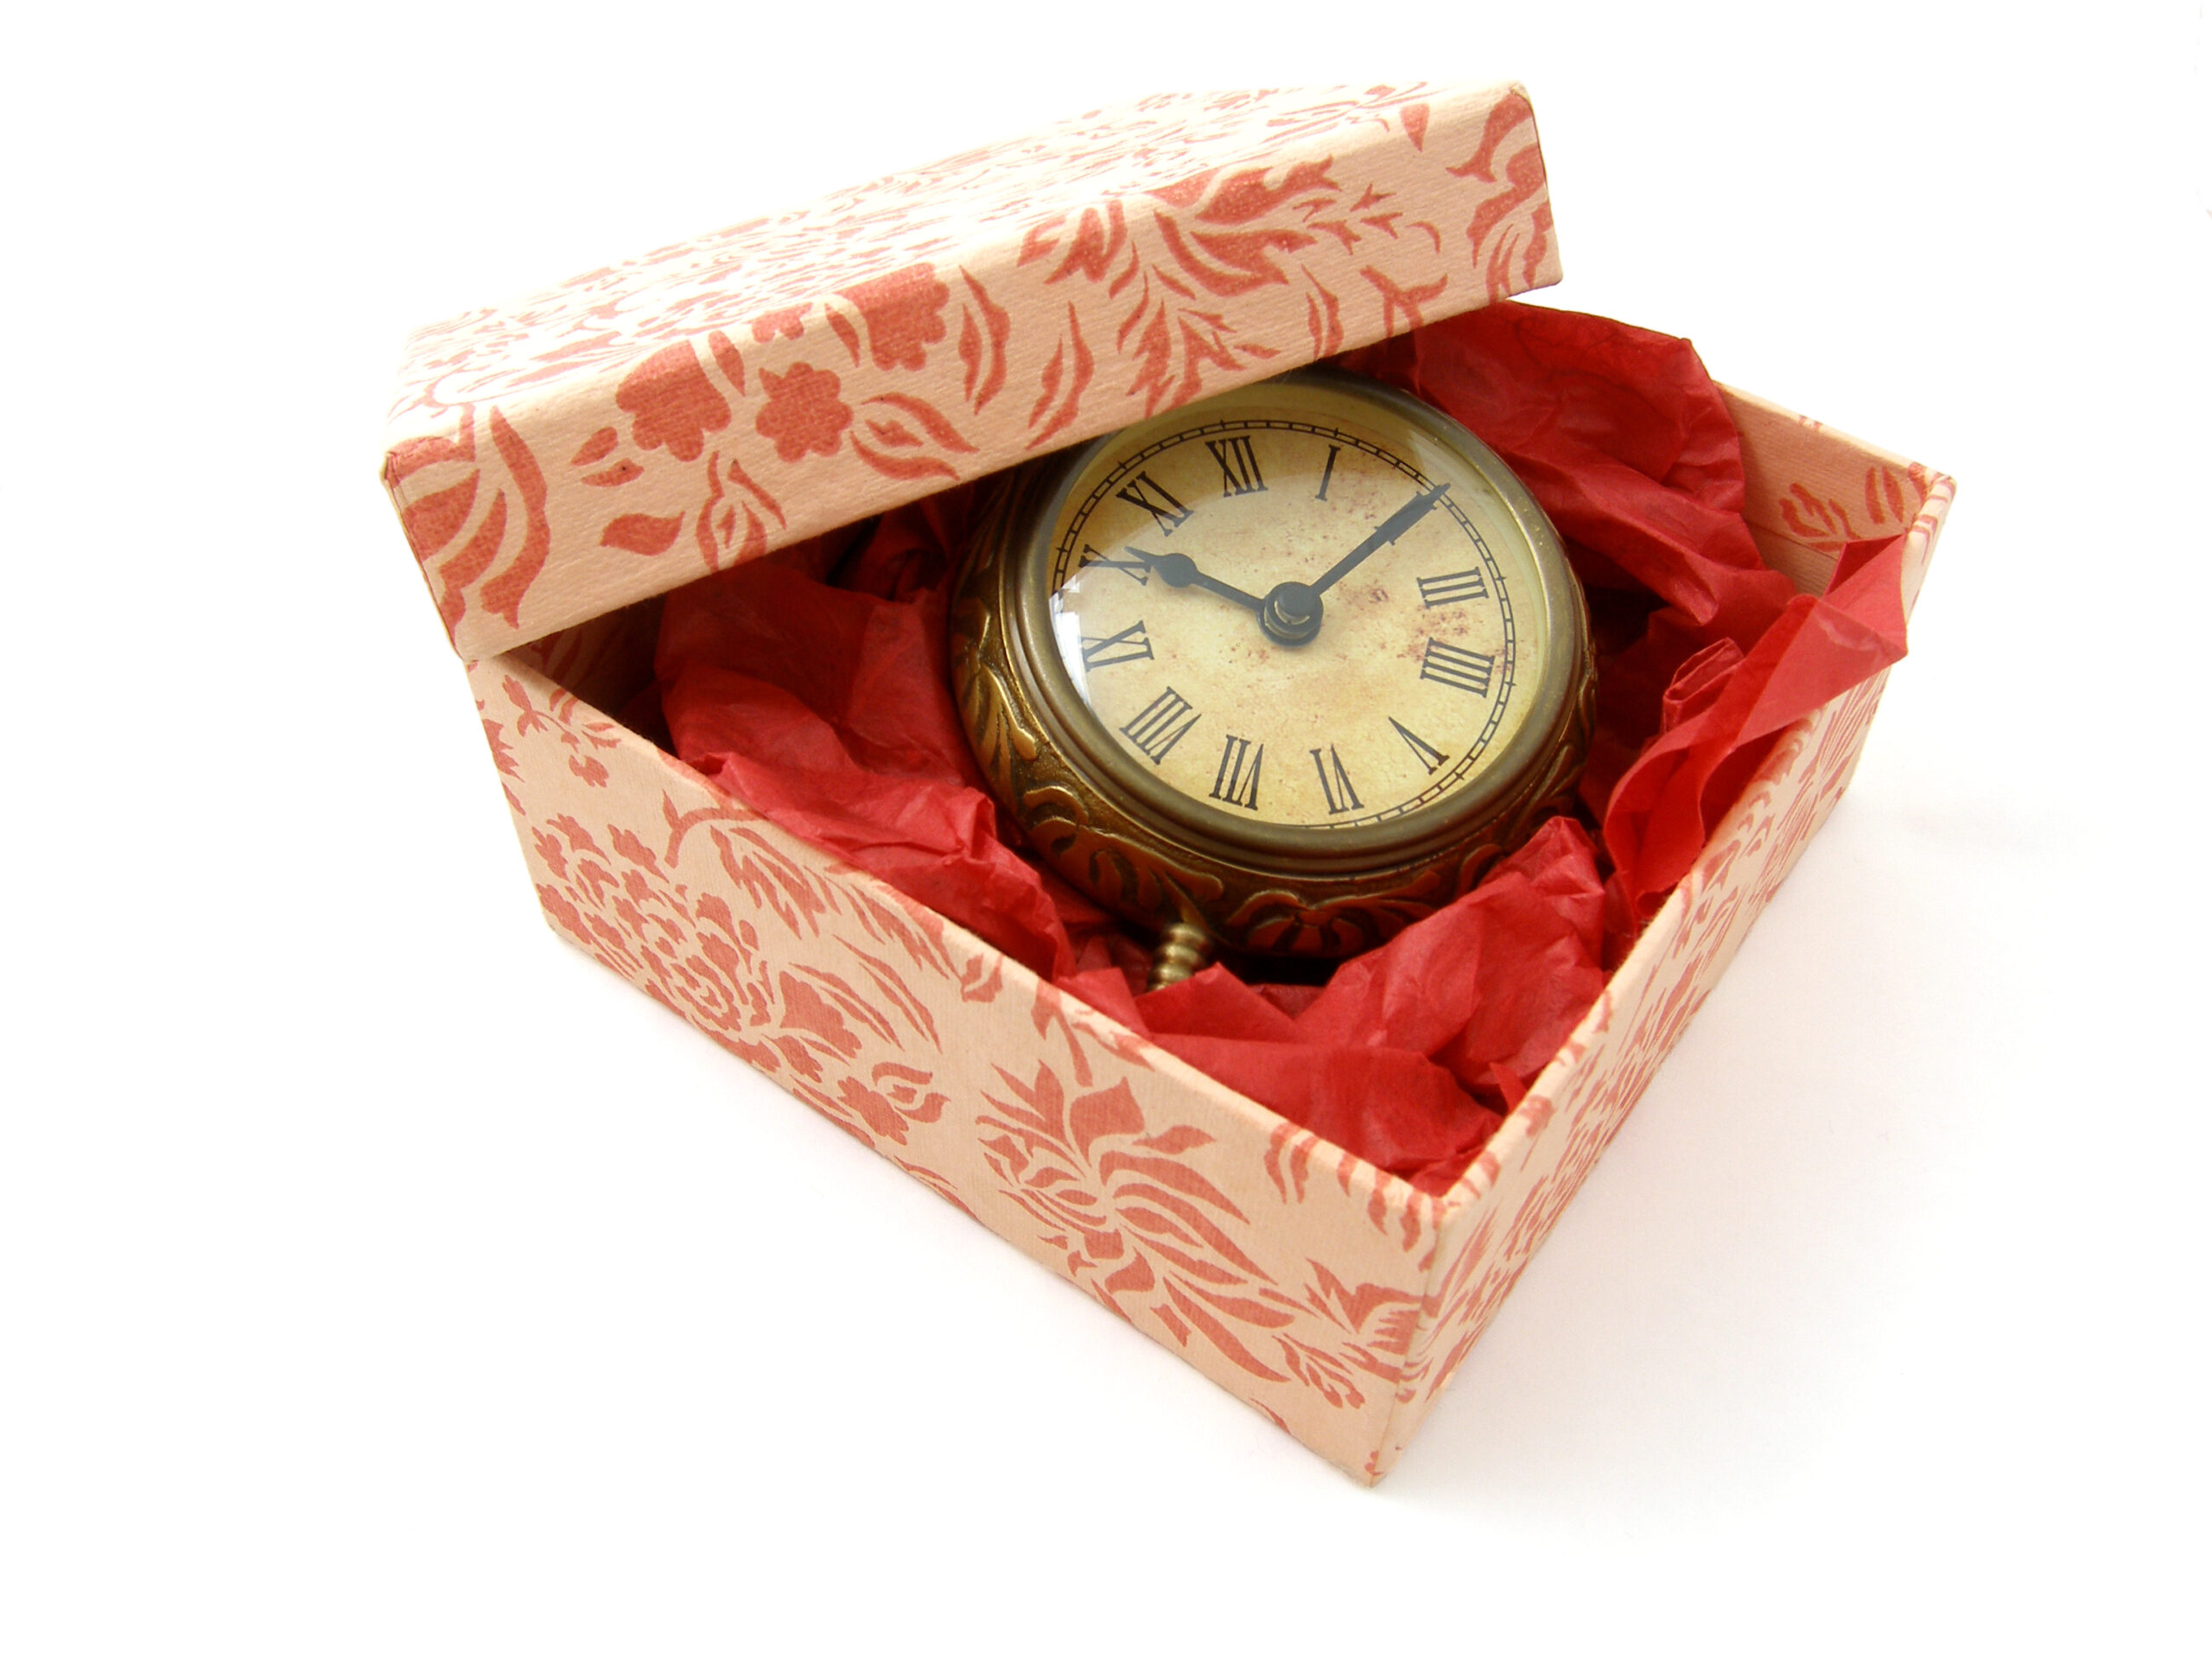 Clock in a gift box